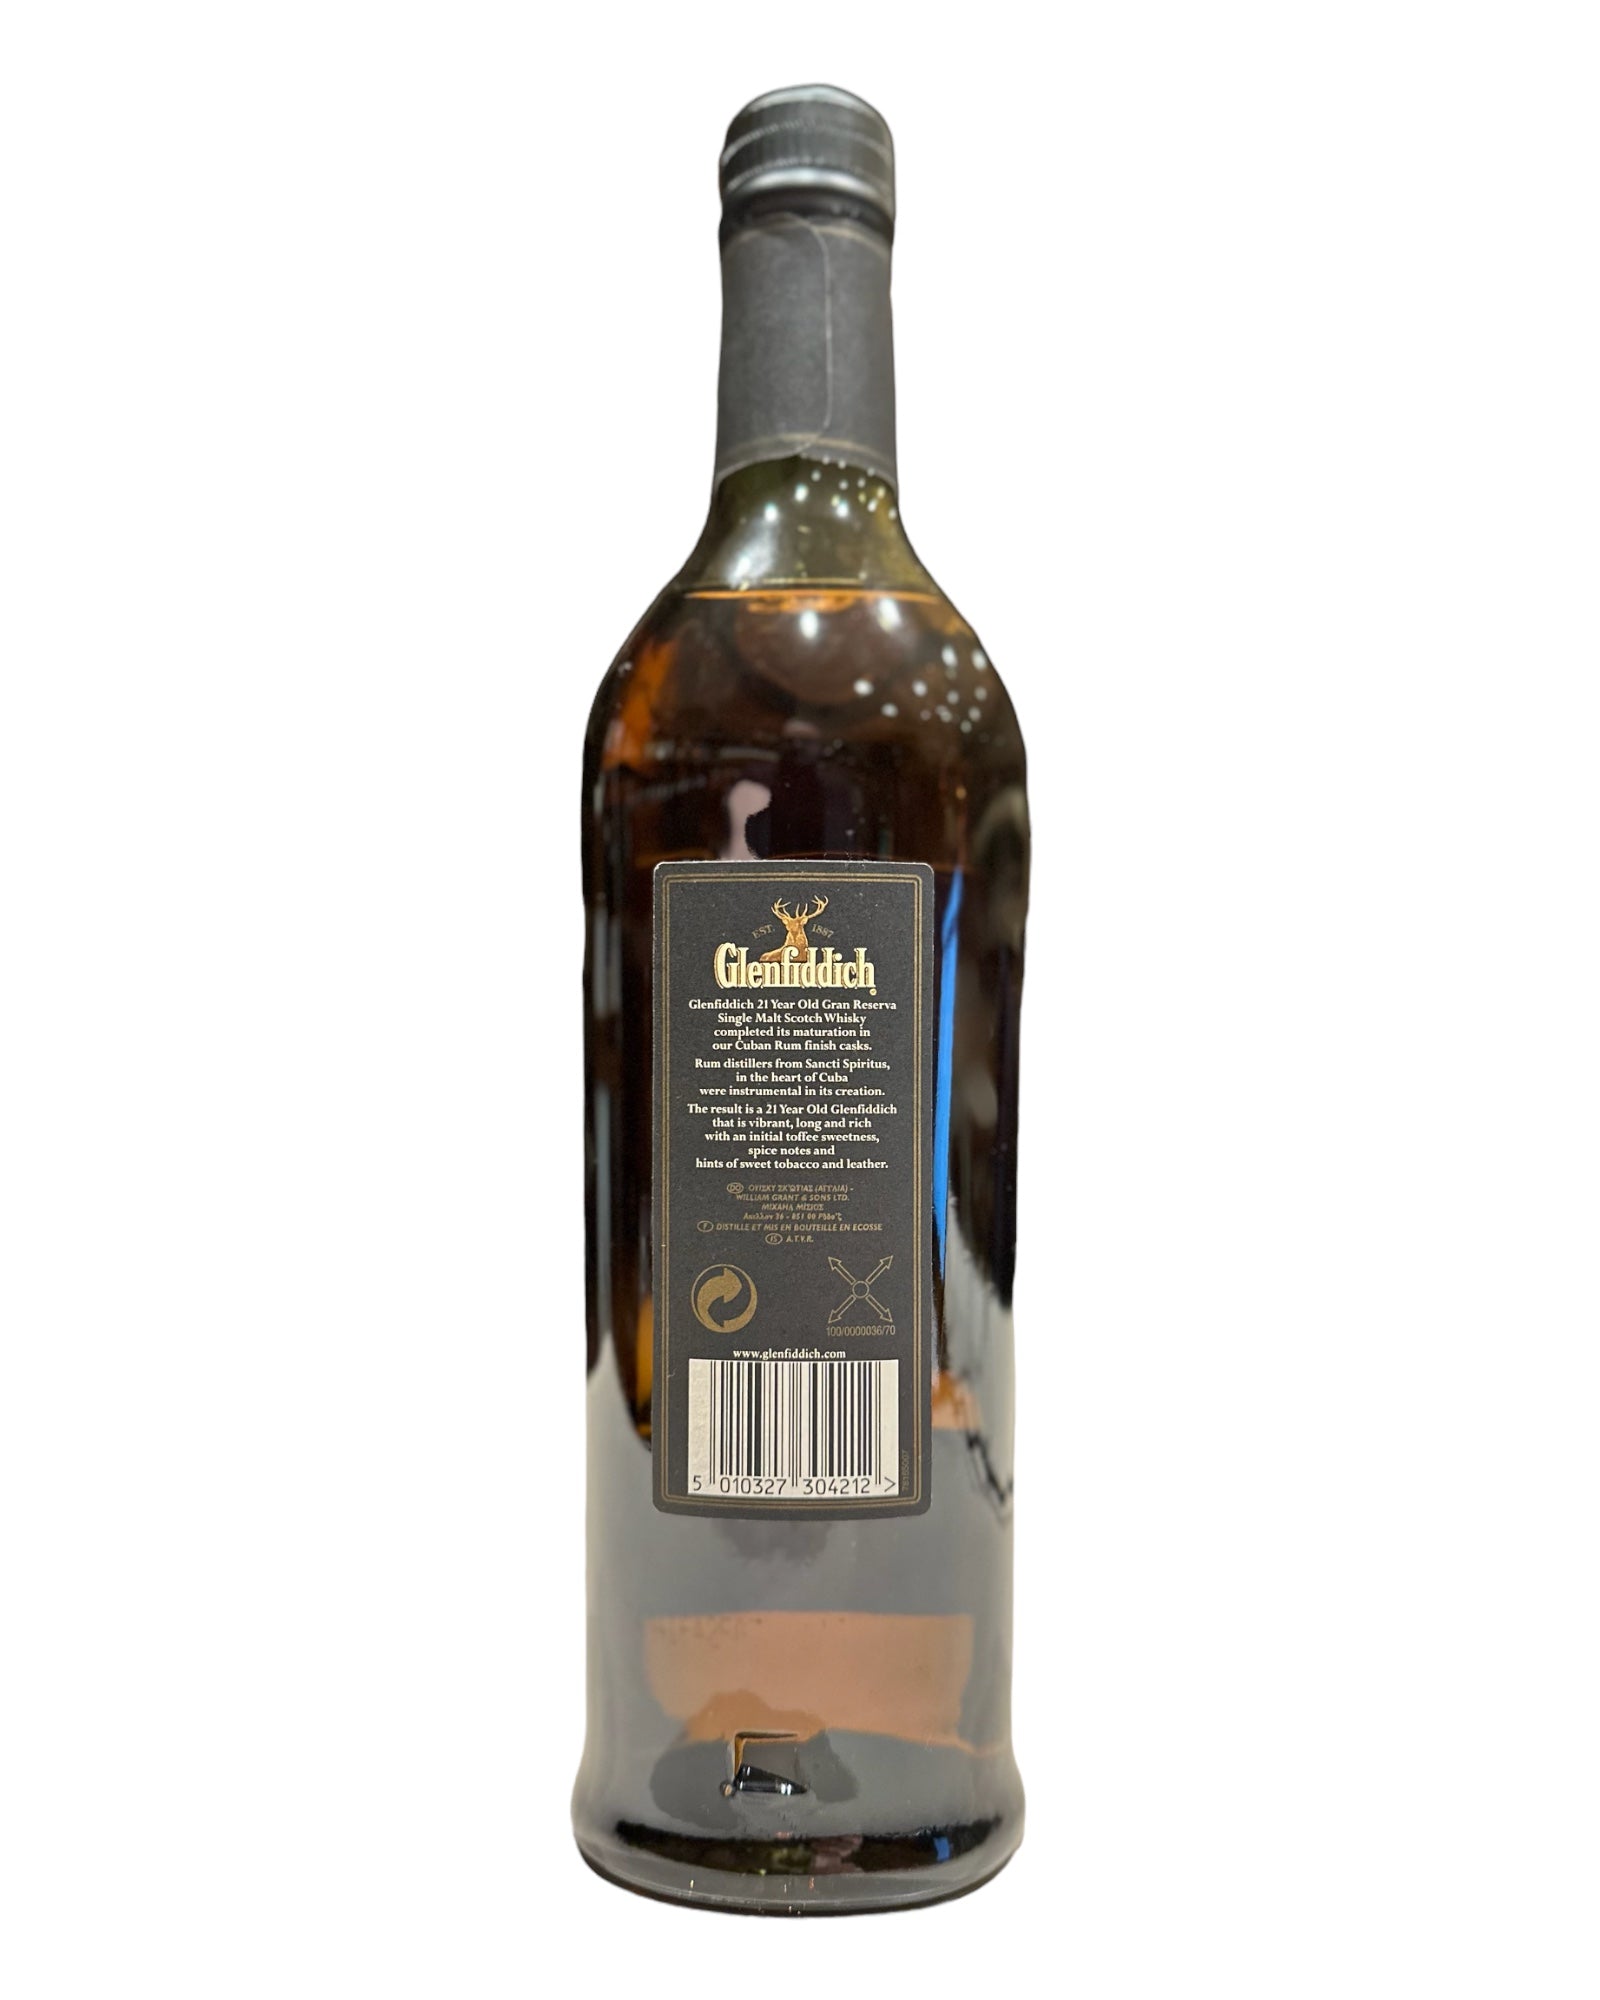 Glenfiddich 21 Year Old - Gran Reserva - Cuban Rum Finish